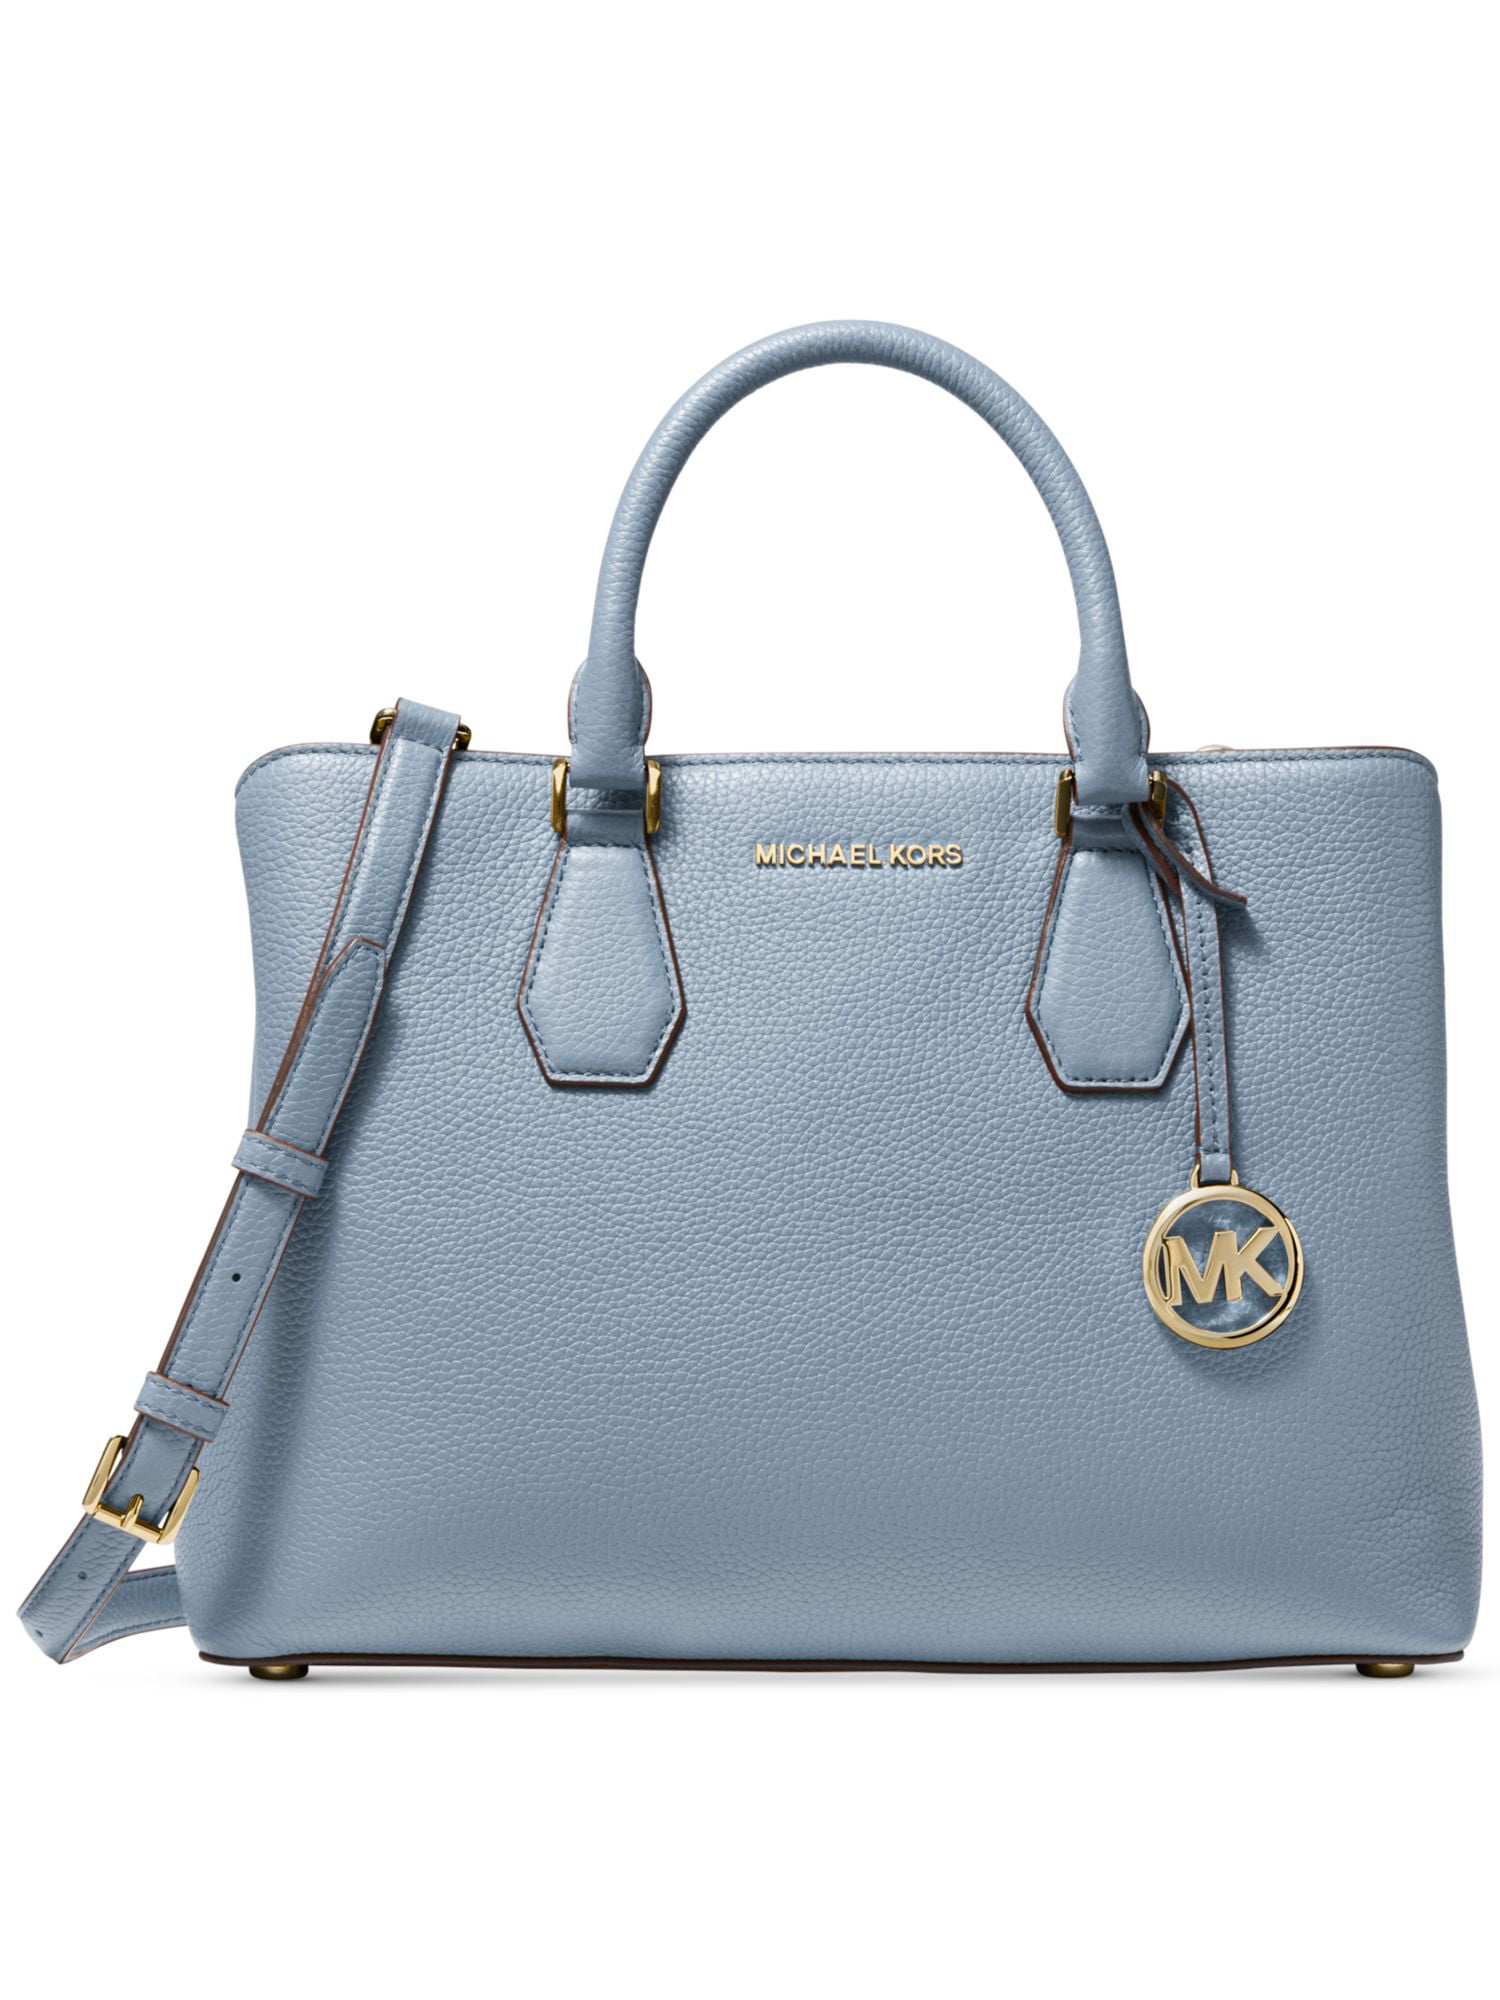 MICHAEL KORS Women's Light Blue Leather Double Flat Strap Satchel Handbag -  